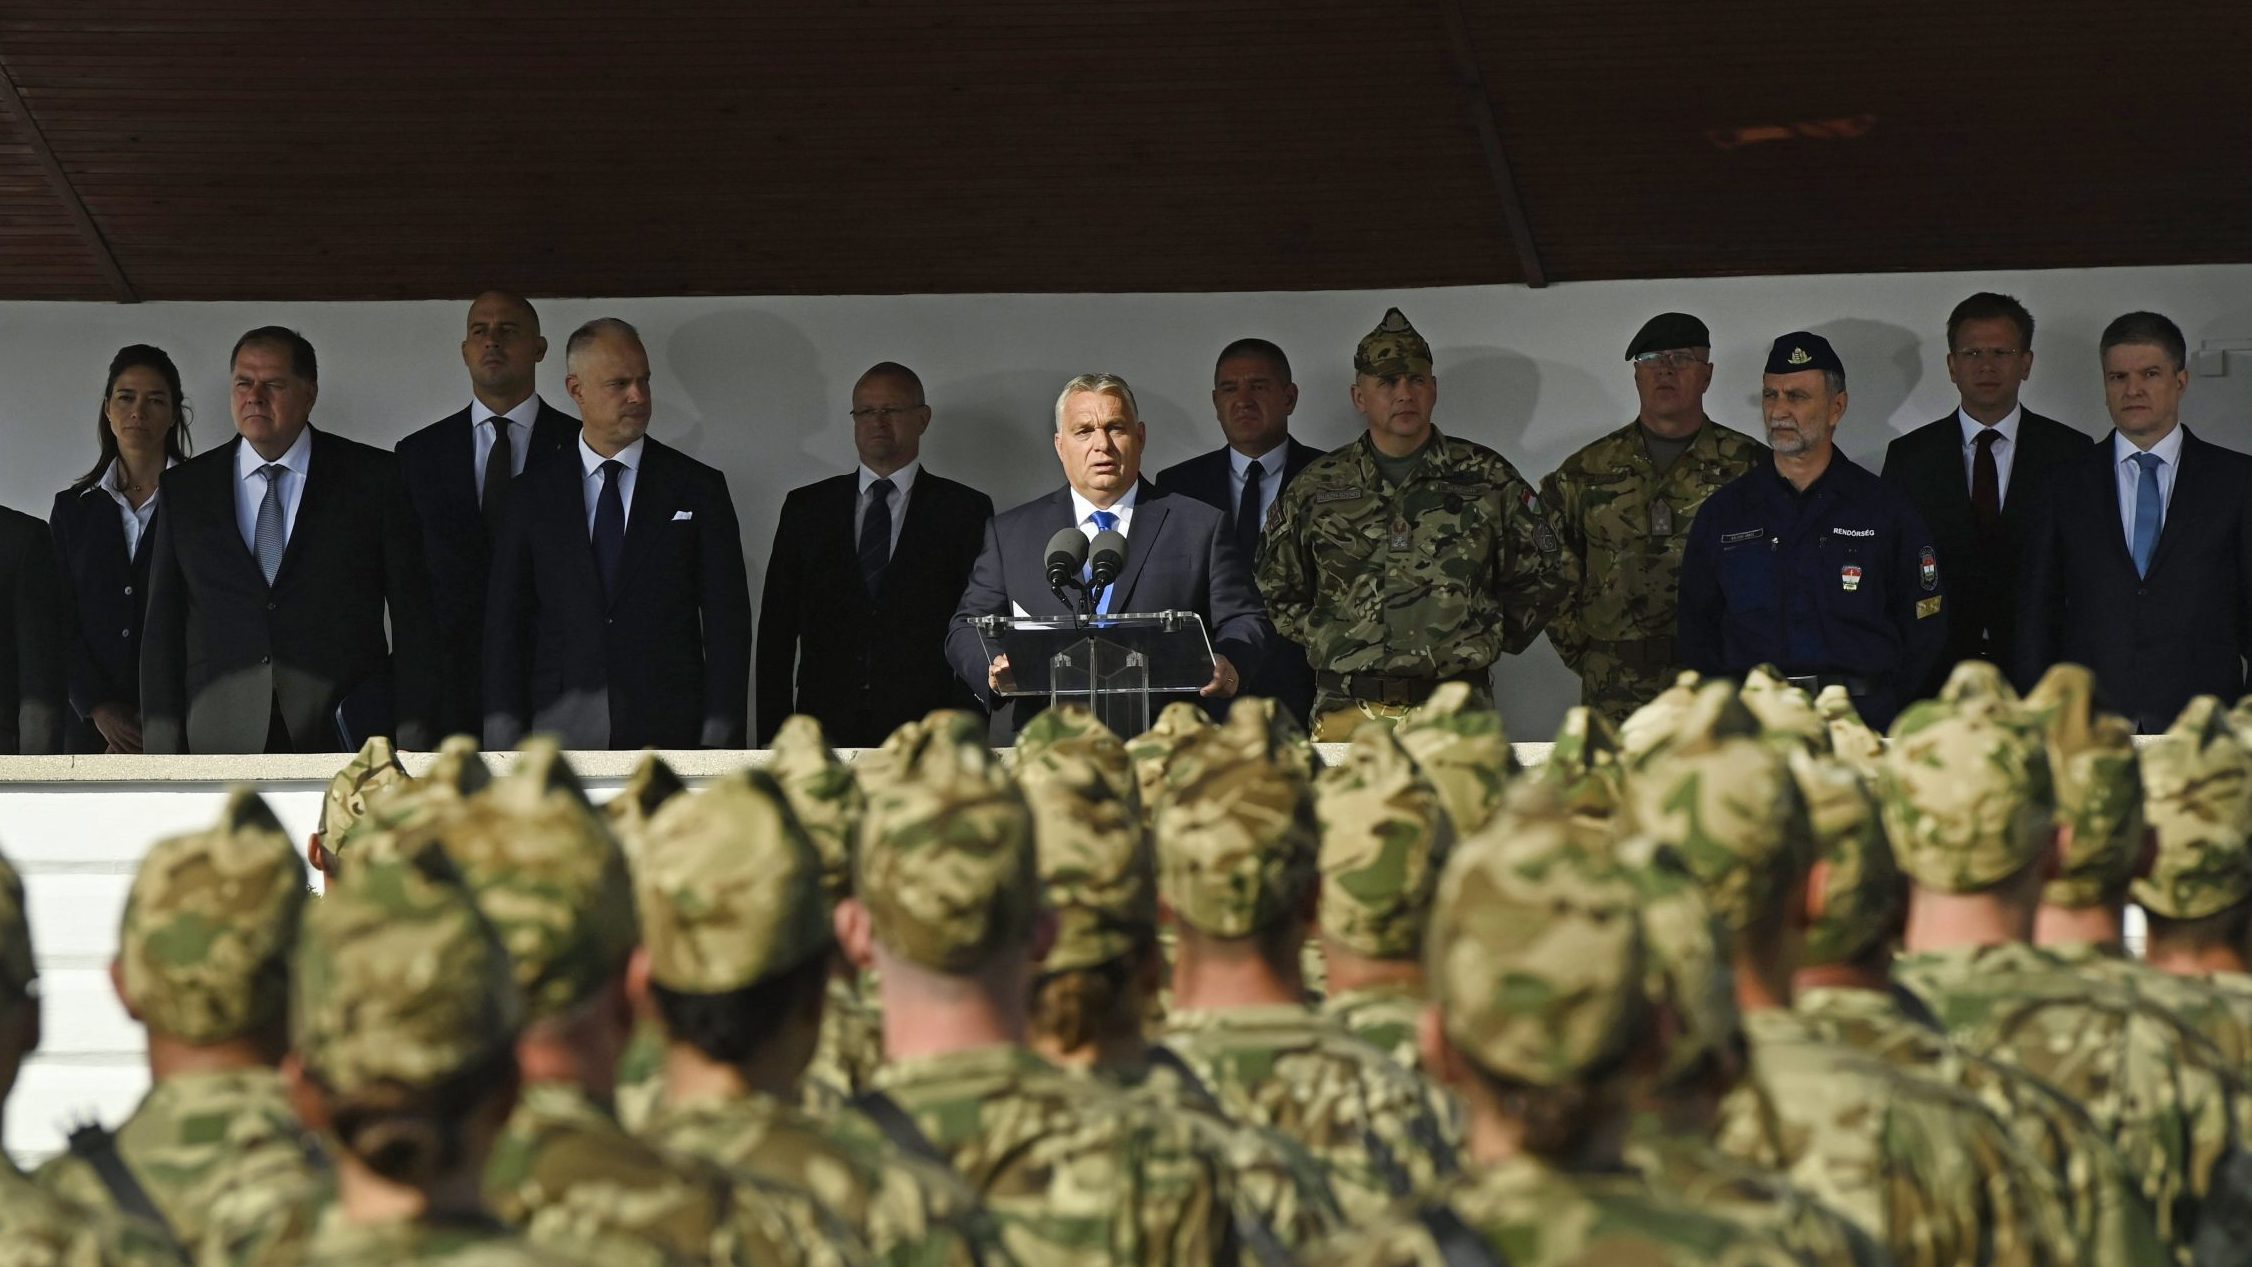 Viktor Orbán Pledges to Strengthen Hungary's Army